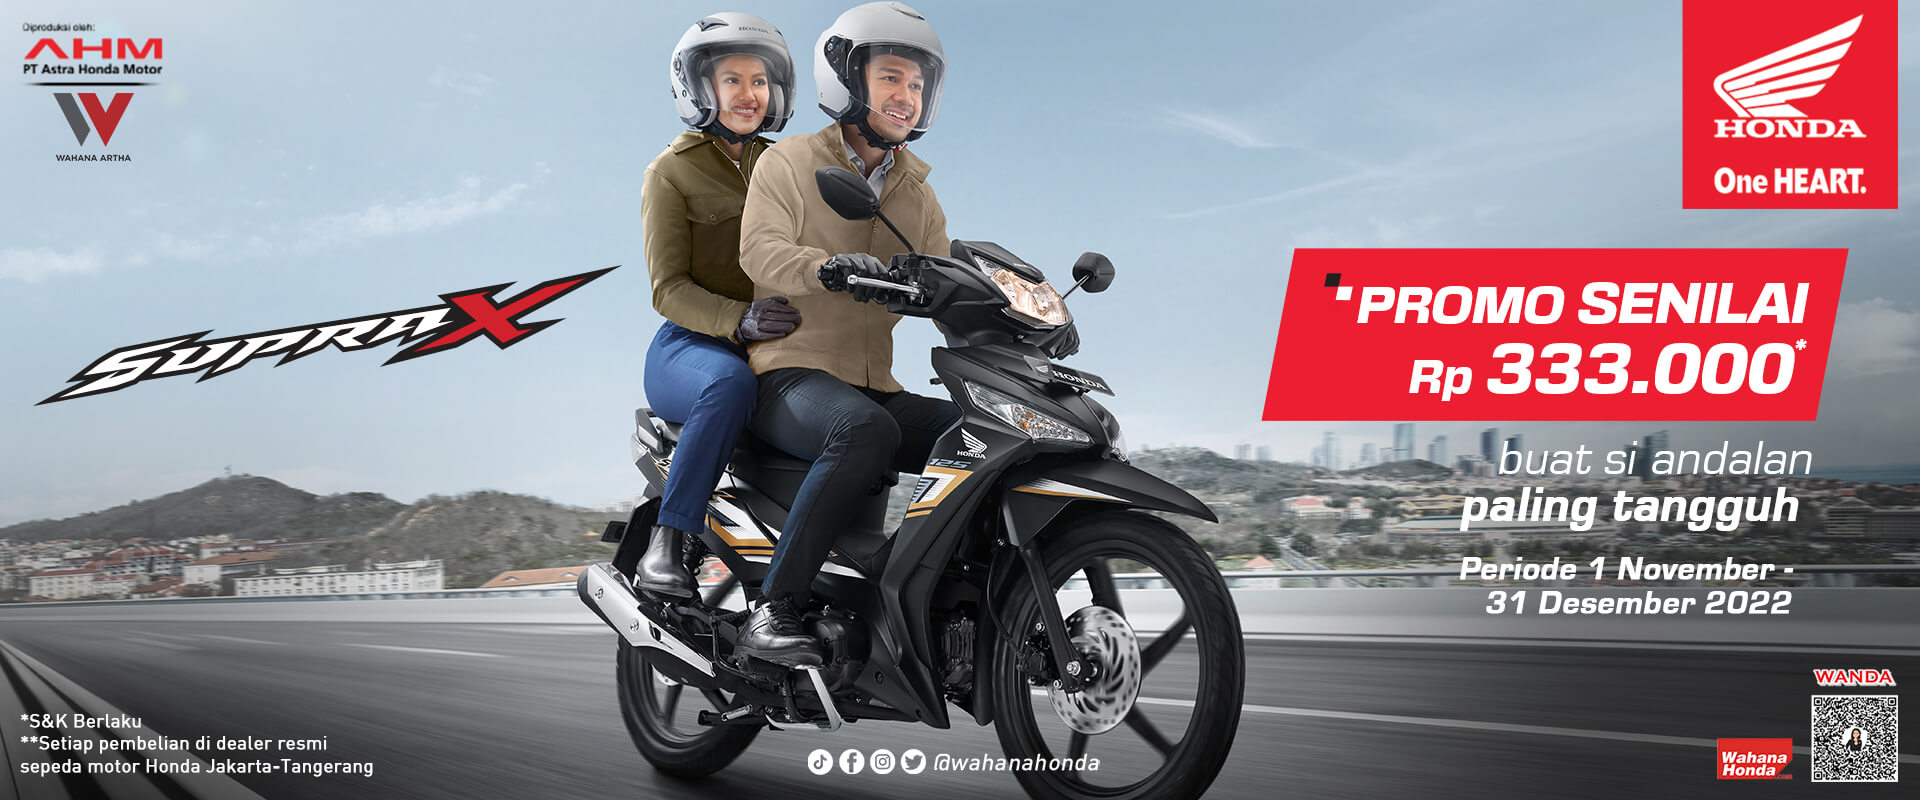 Promo Honda Supra X 125 Periode November - Desember 2022